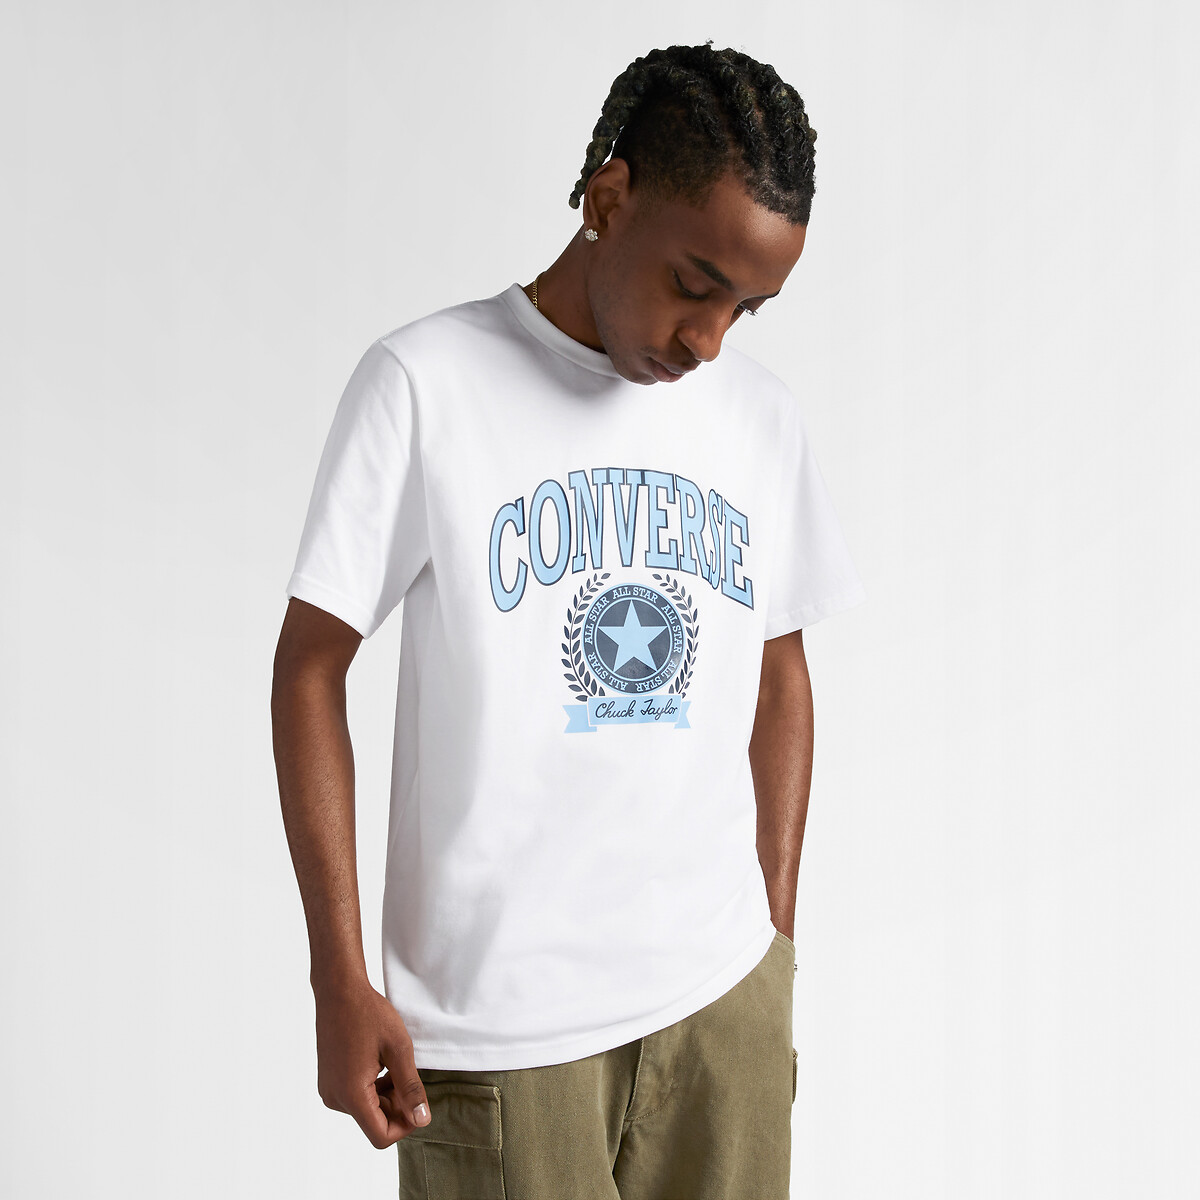 Converse T-shirt met korte mouwen, groot logo